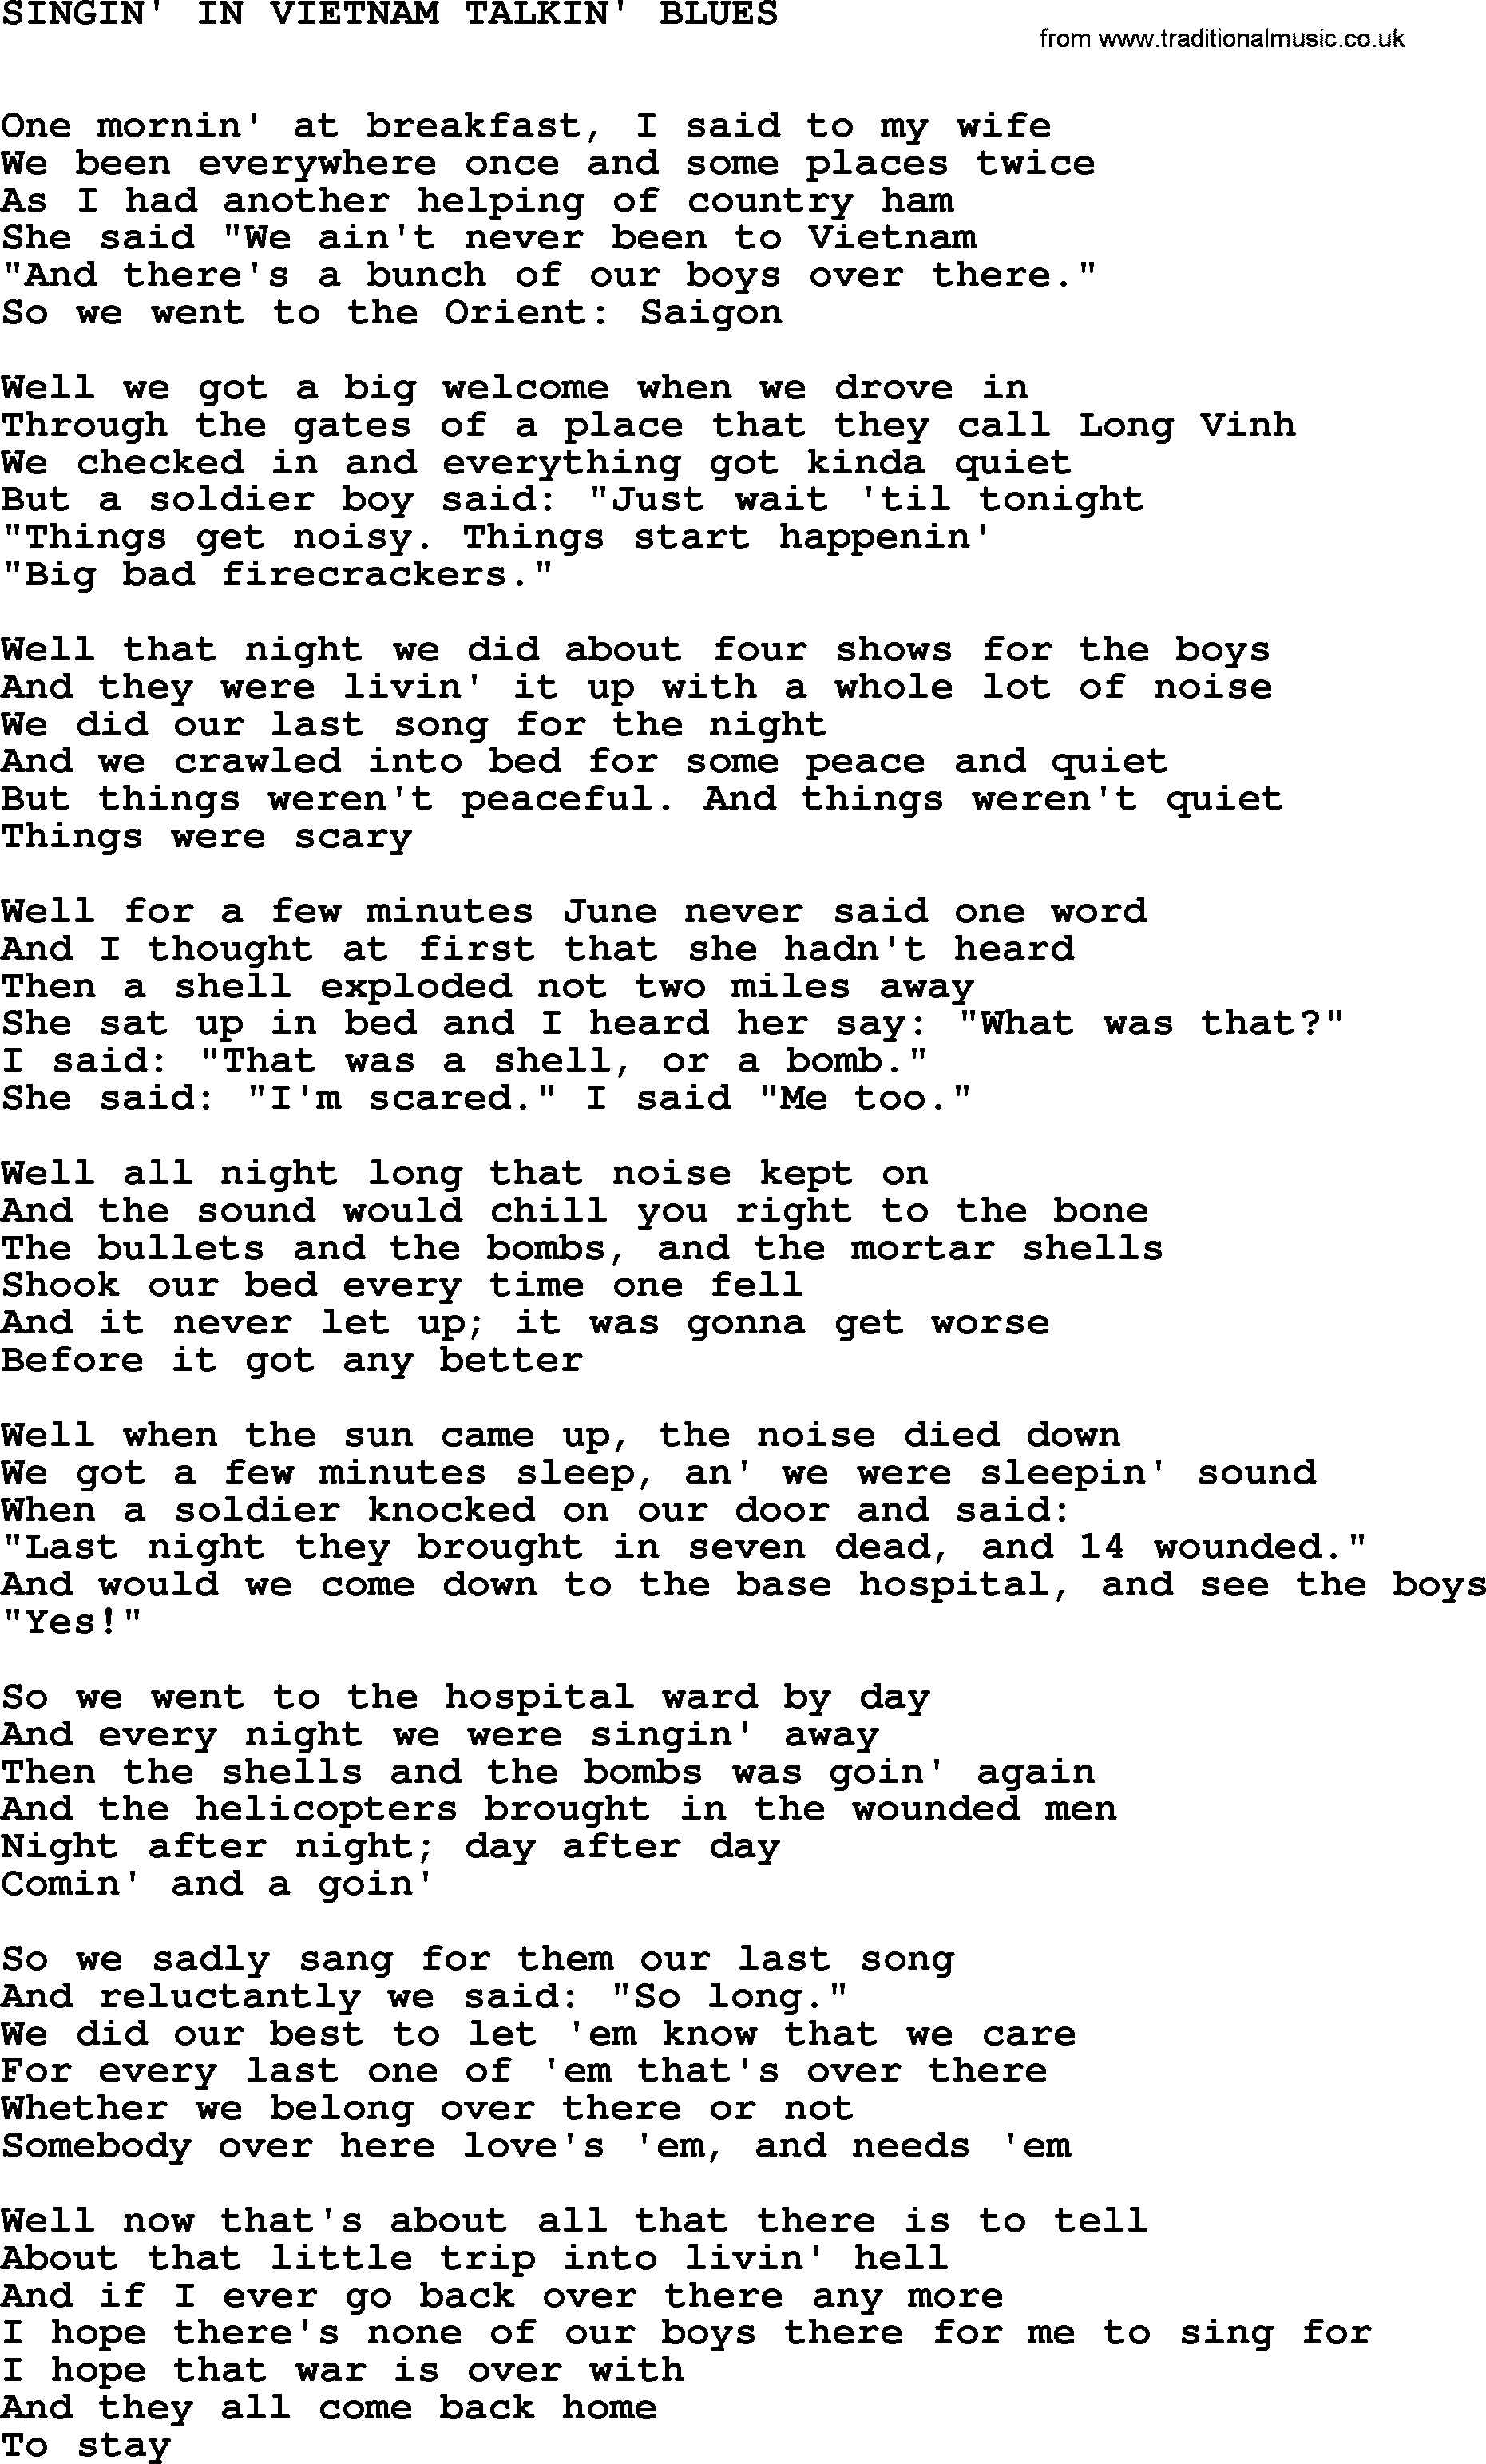 Johnny Cash song Singin' In Vietnam Talkin' Blues.txt lyrics